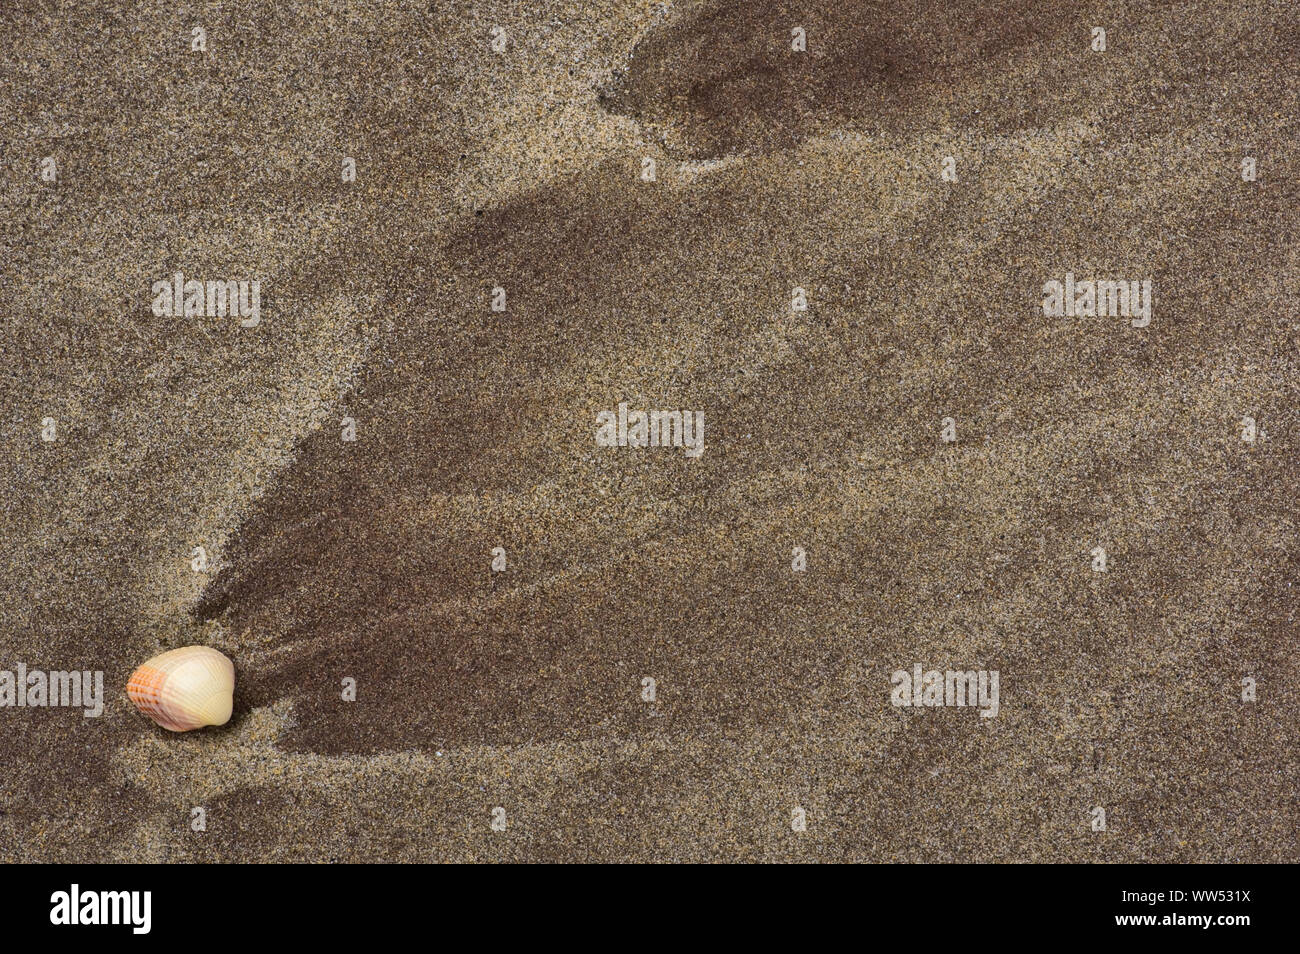 Ireland, County Kerry, Dingle peninsula, mussel on sandy beach Stock Photo